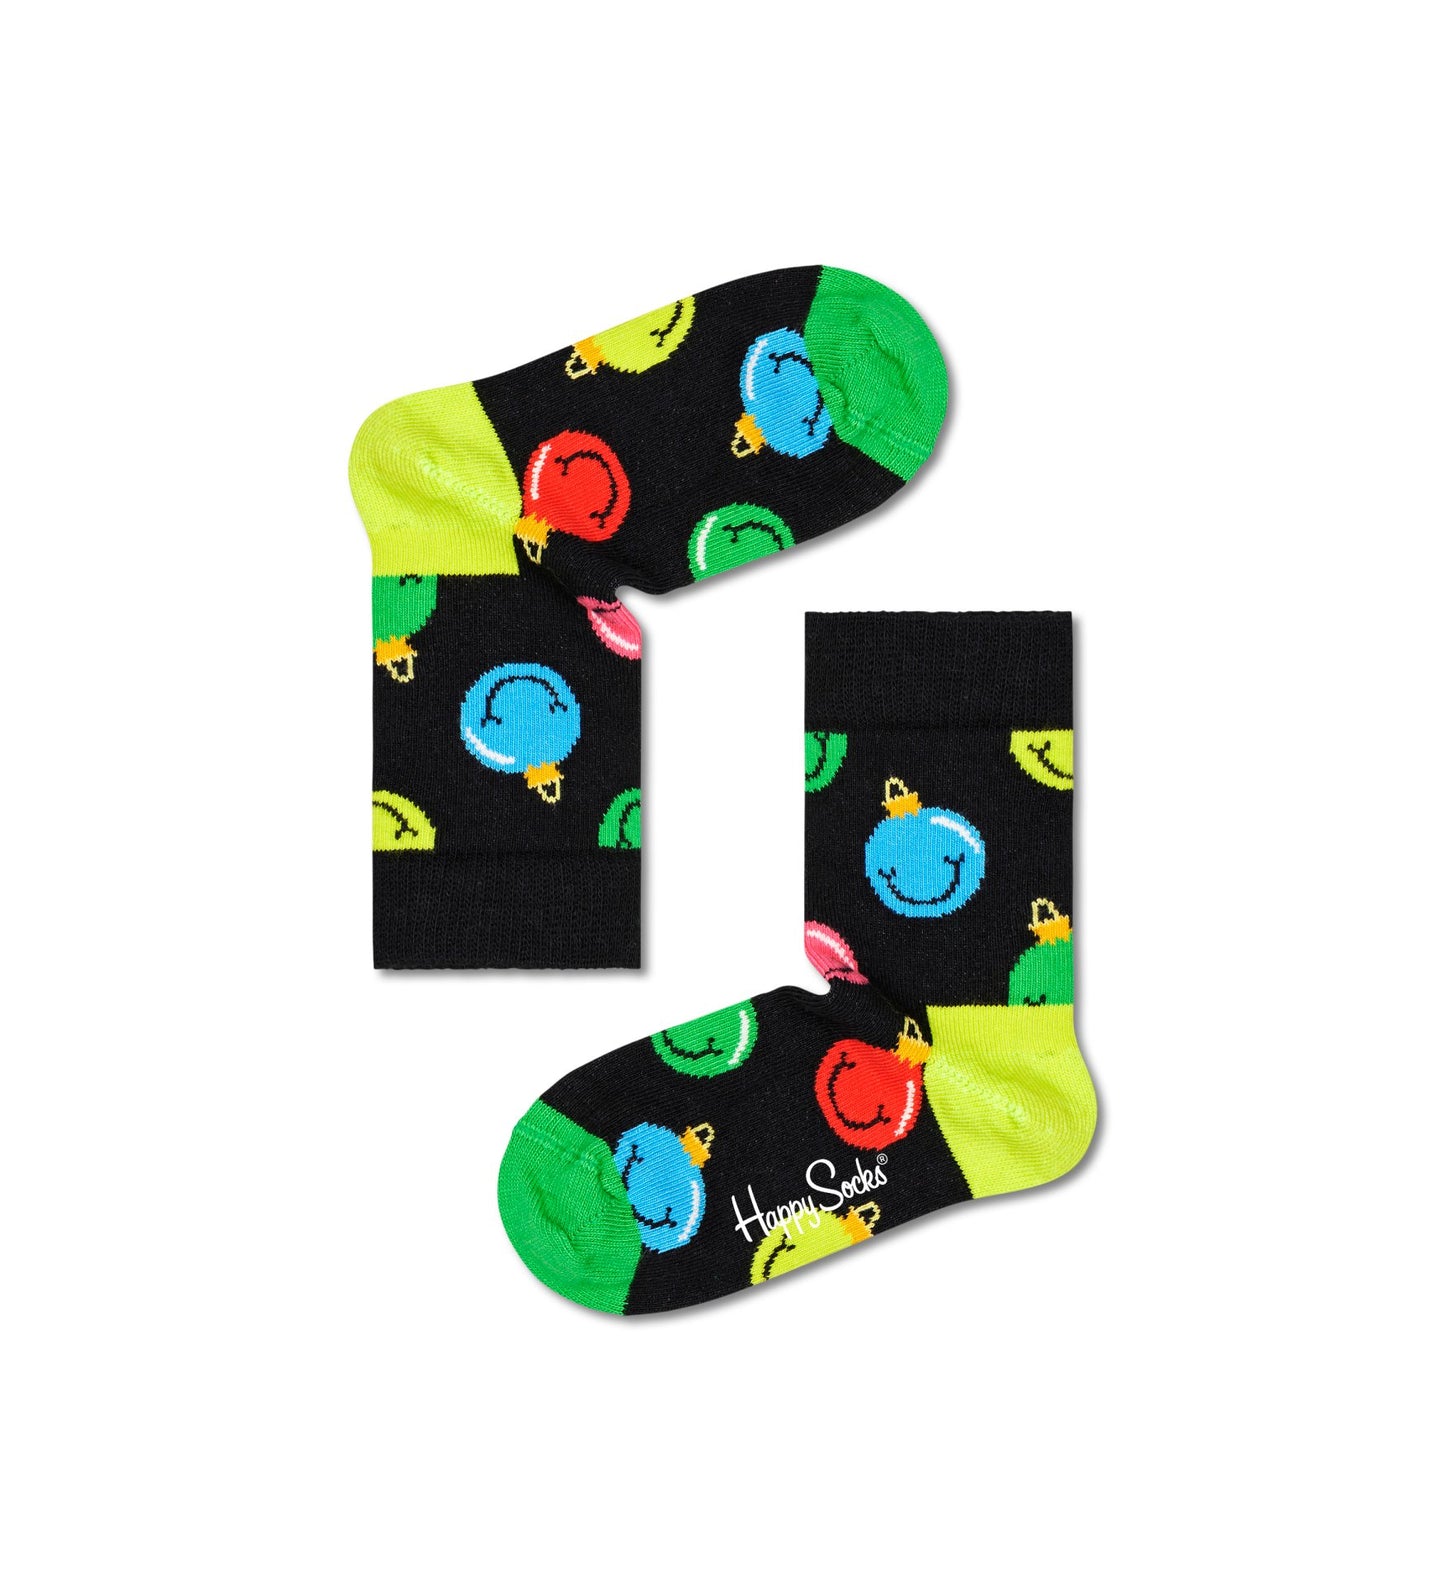 Happy Socks 2-pack ornament box gift set